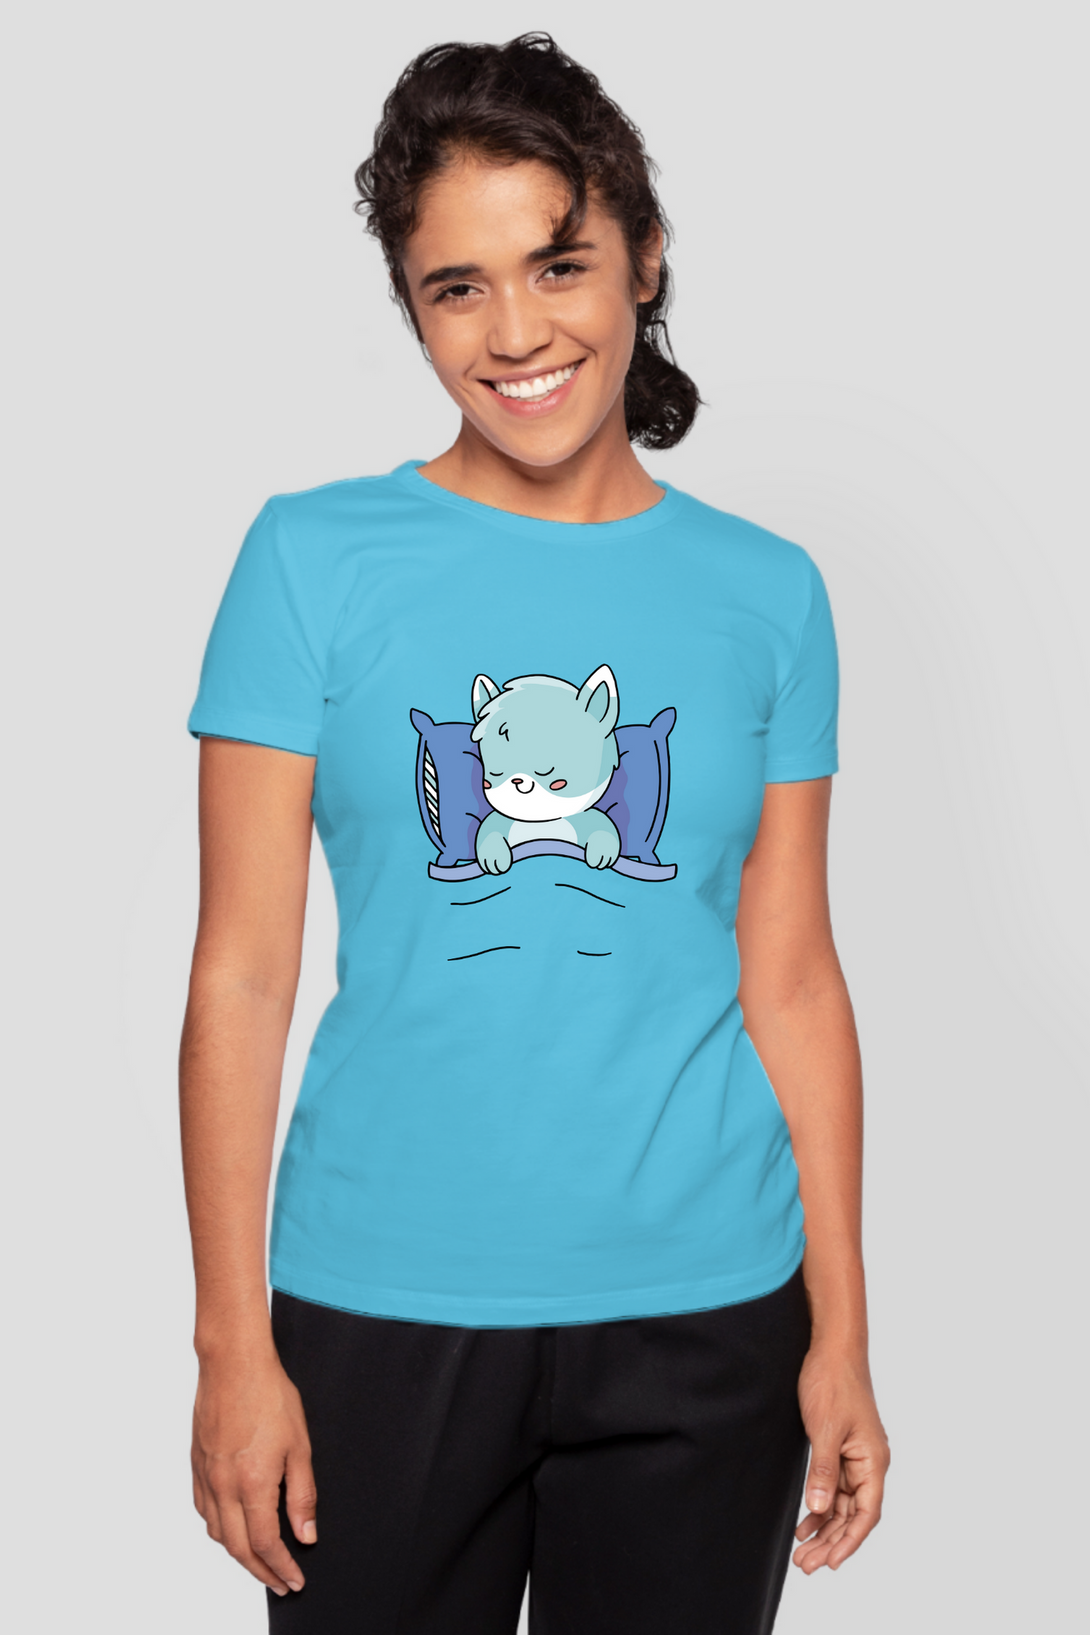 Cute Sleeping Cat Printed T-Shirt For Women - WowWaves - 9